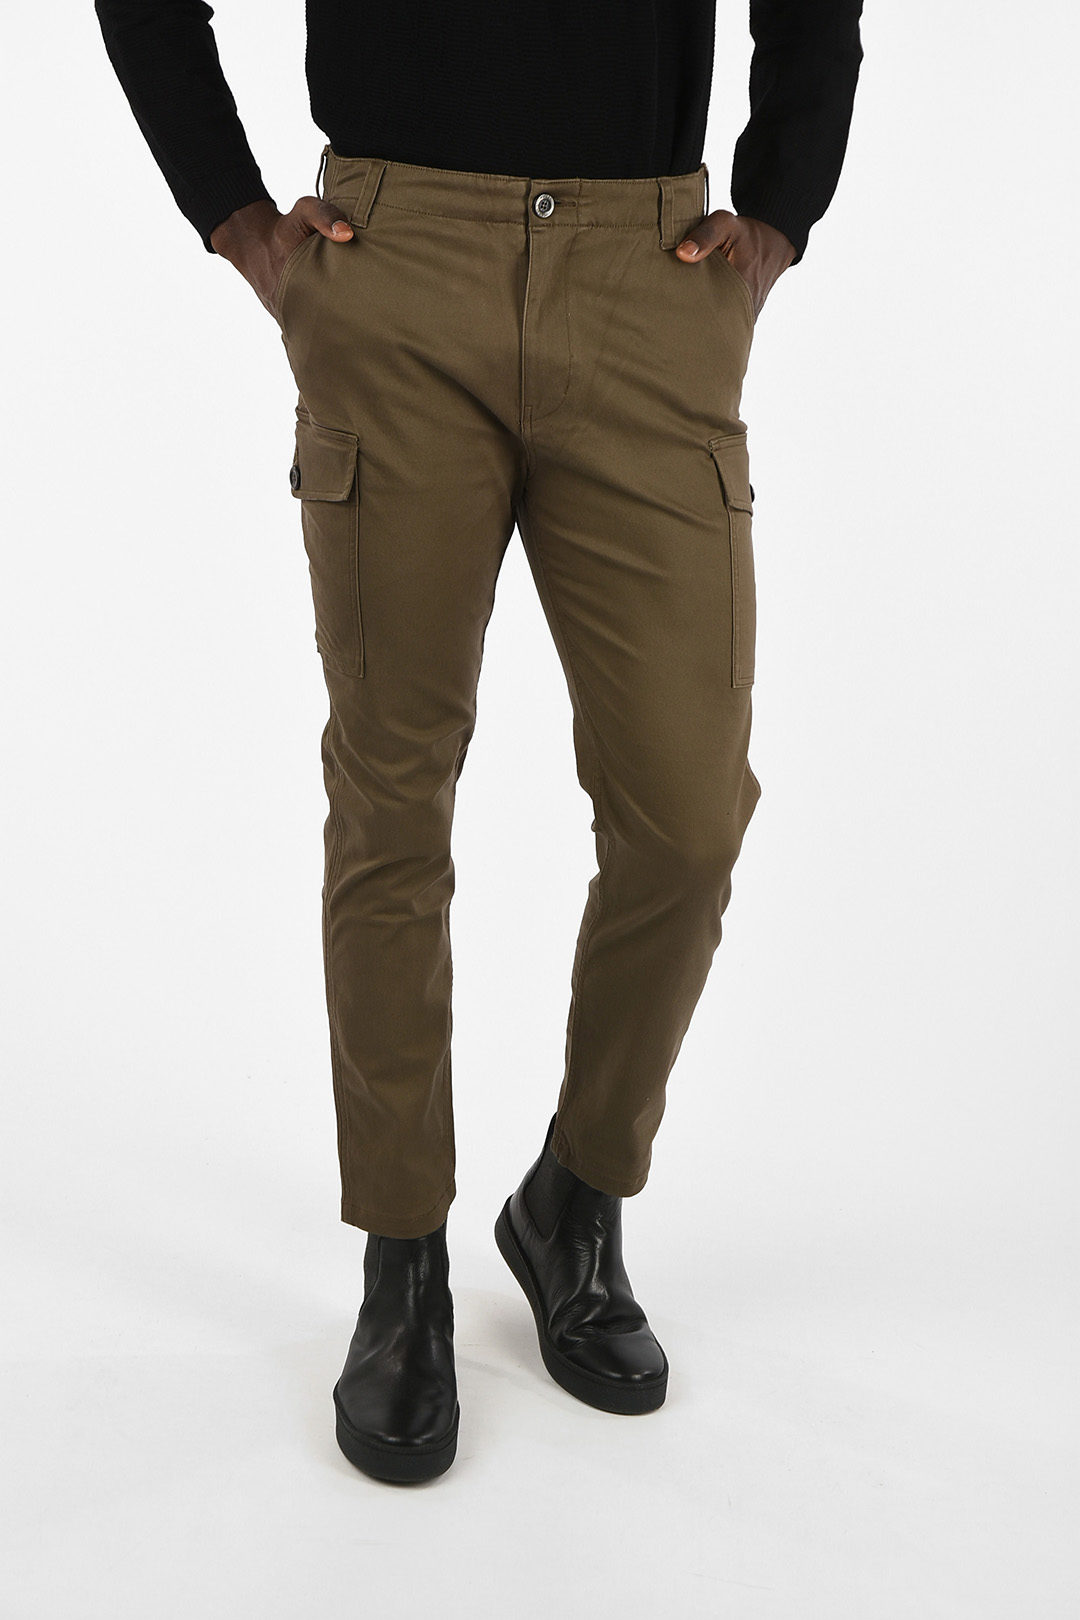 Giorgio Armani Men's Pants for sale | eBay